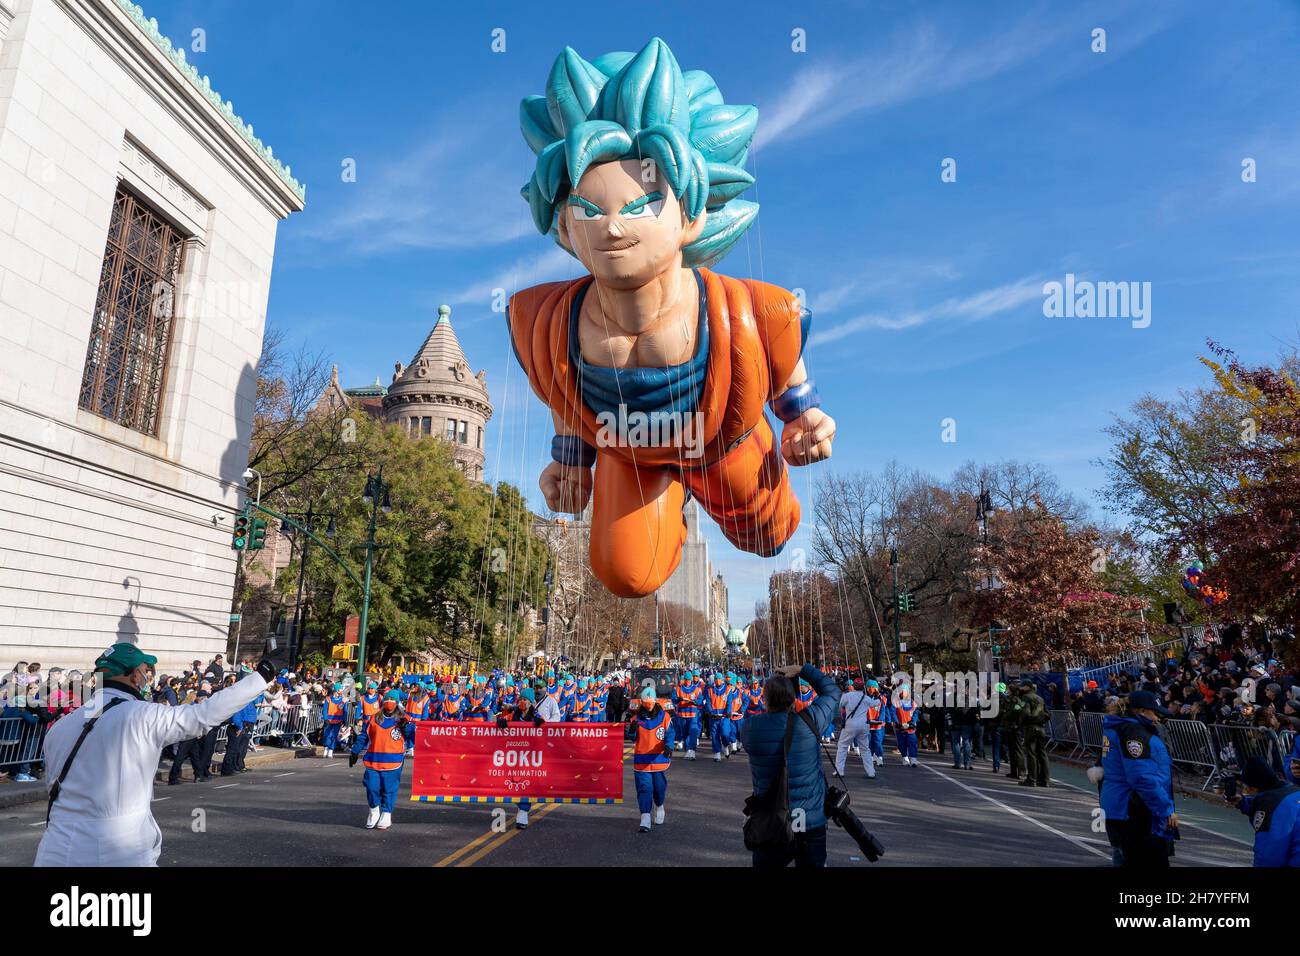 NEW YORK, NY - NOVEMBER 25: Goku balloon moves through the 95th